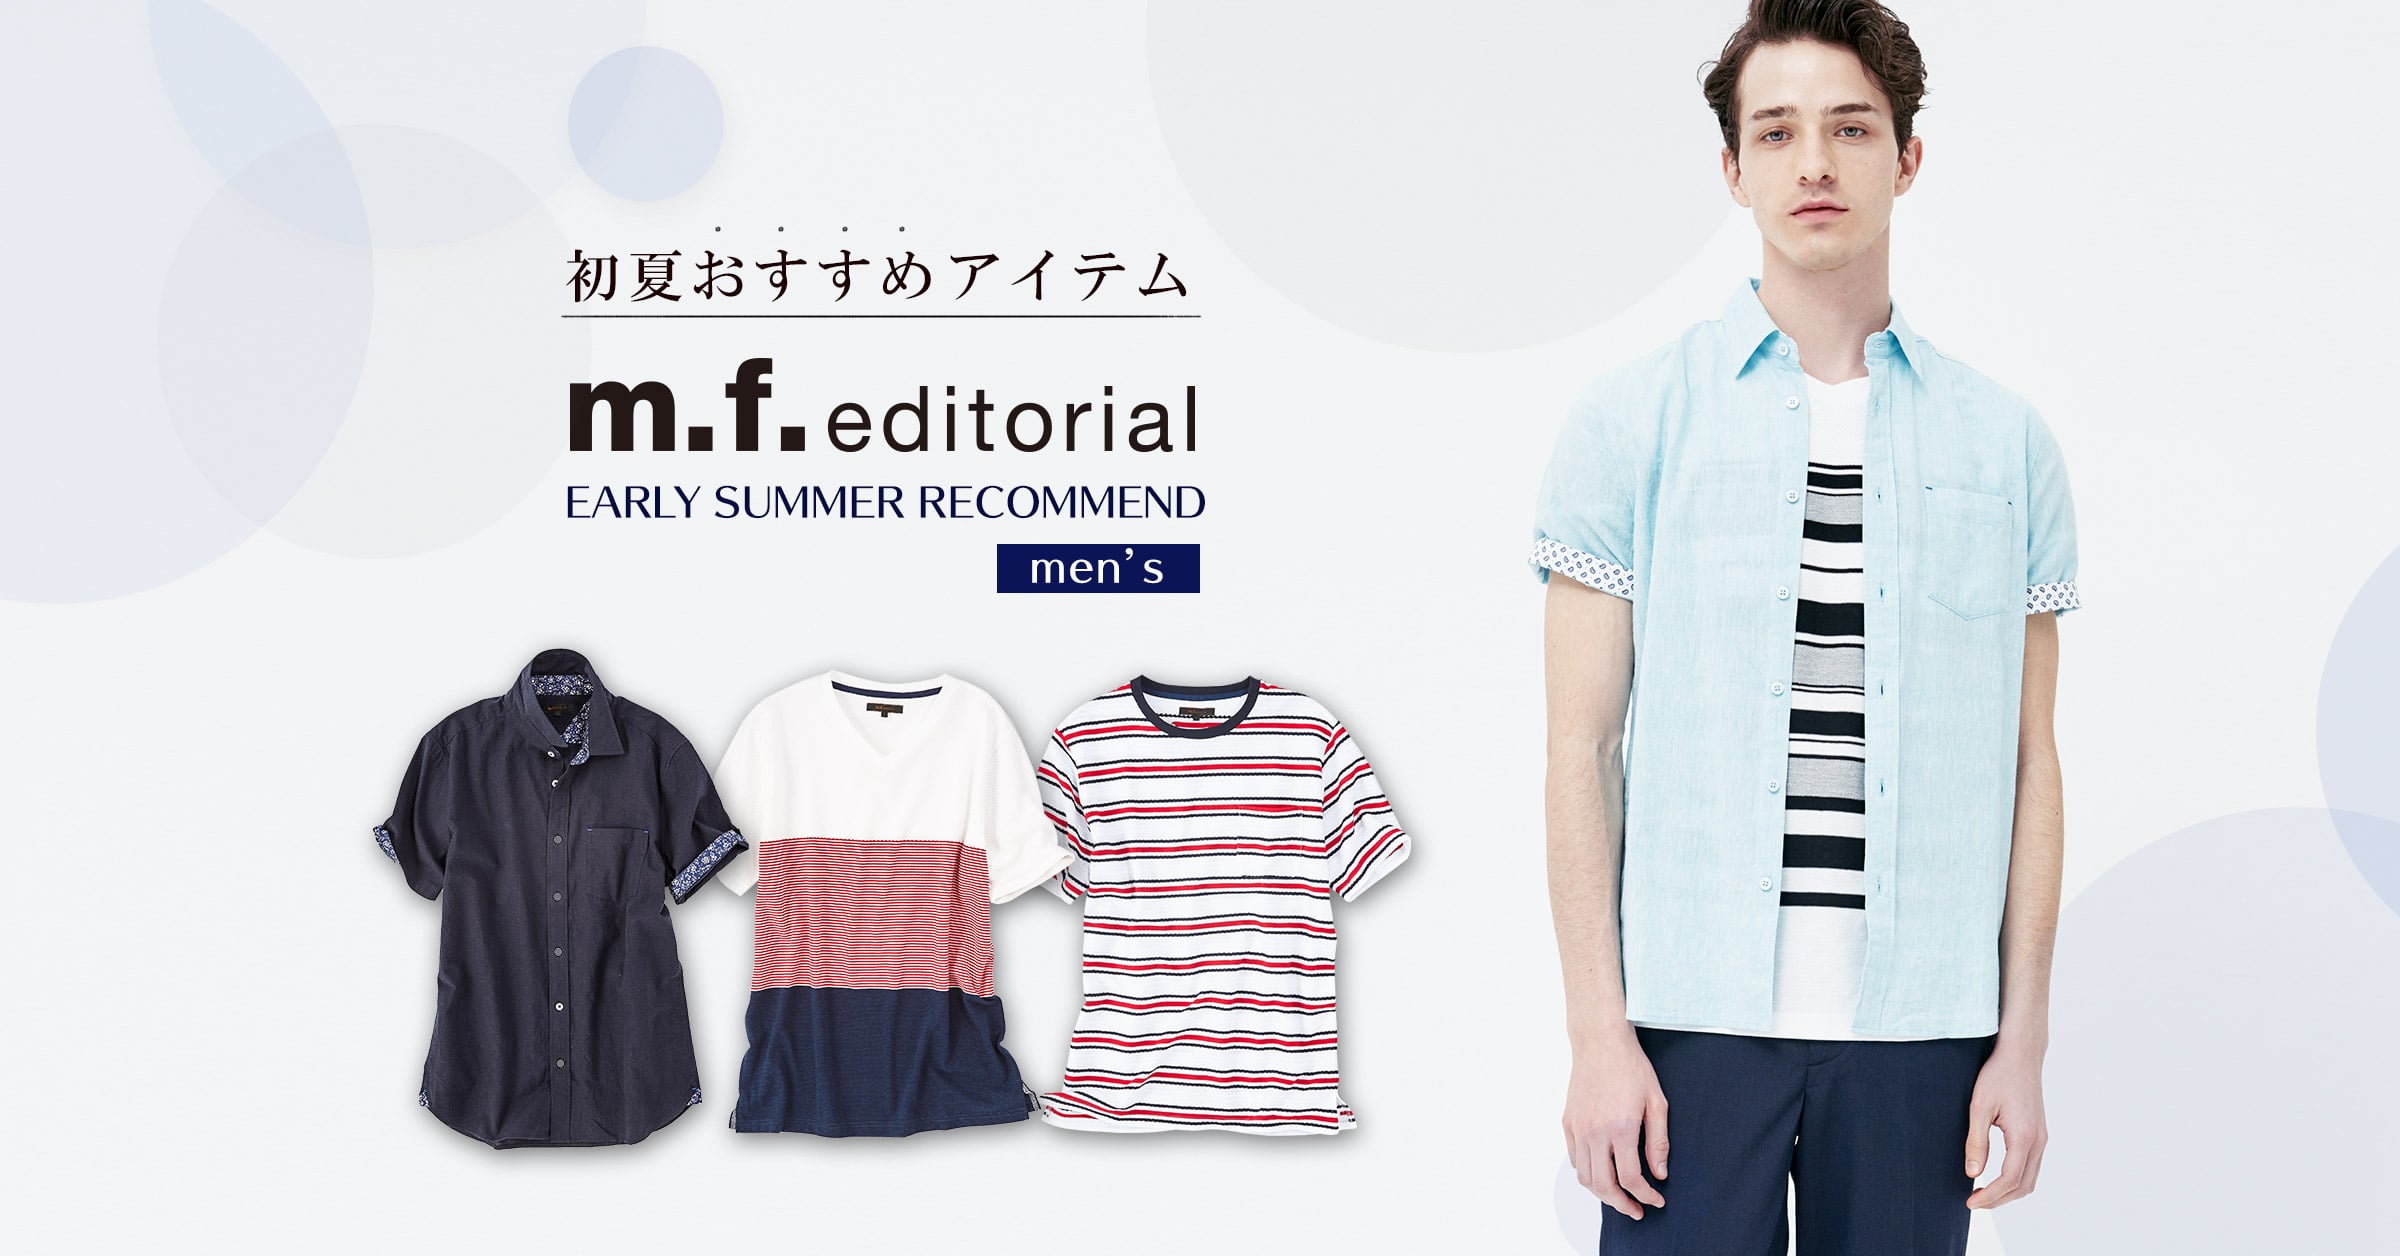 m.f.editorial 初夏おすすめアイテム men's